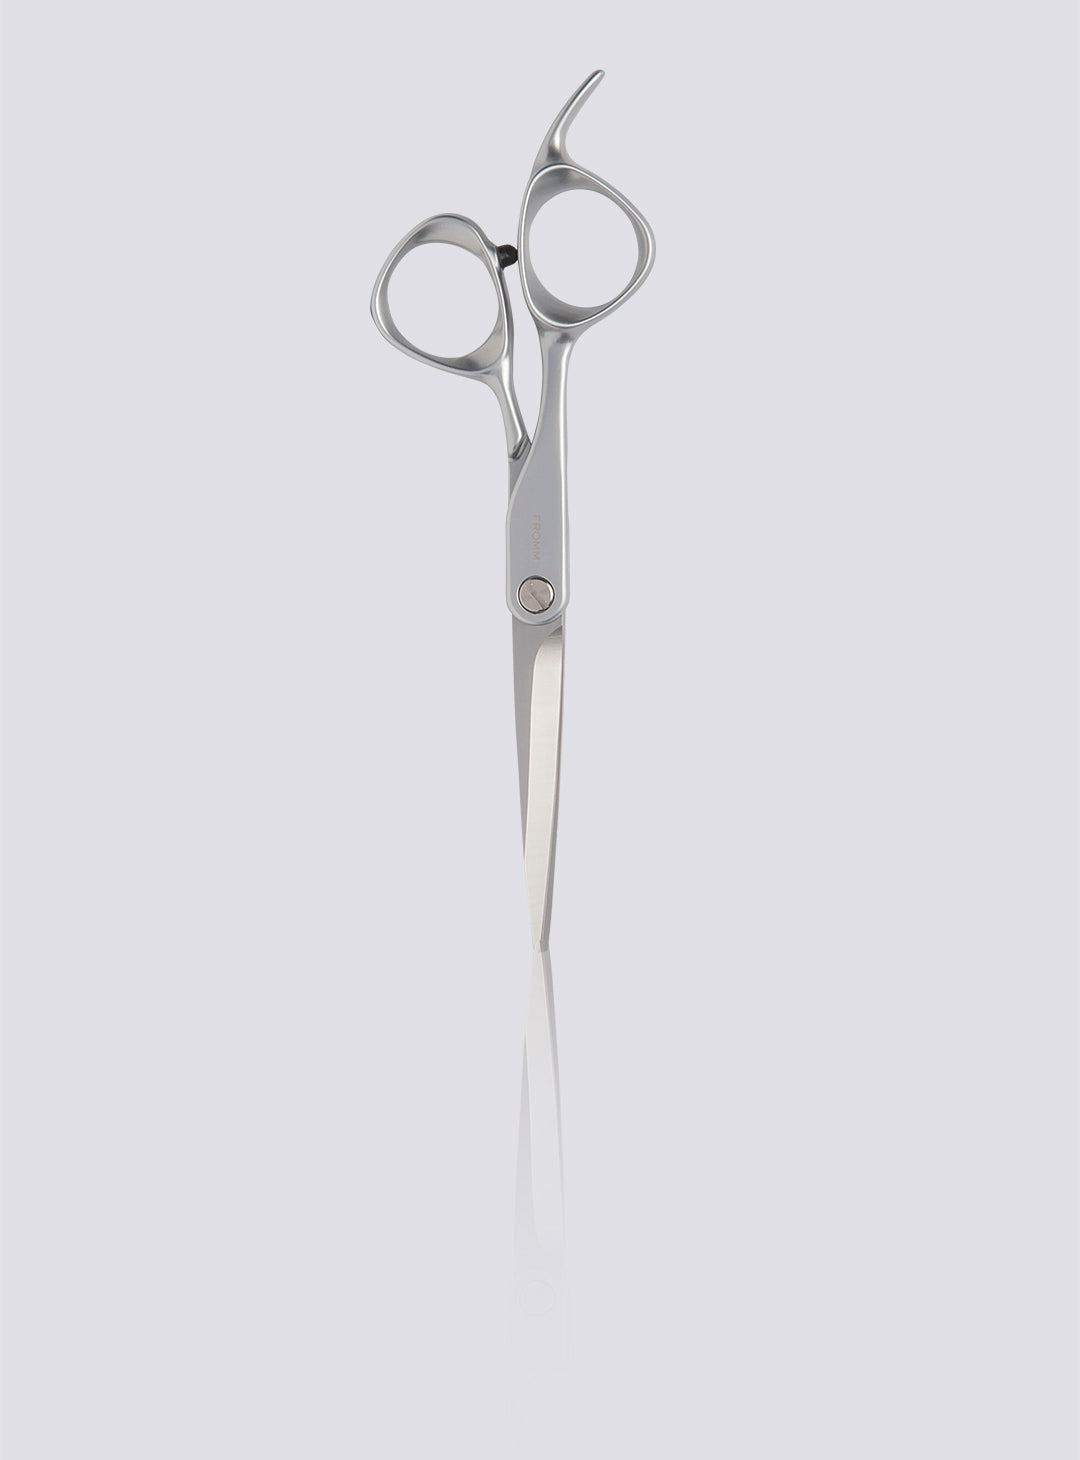 Left Handed Child's Scissor with Central Pivot